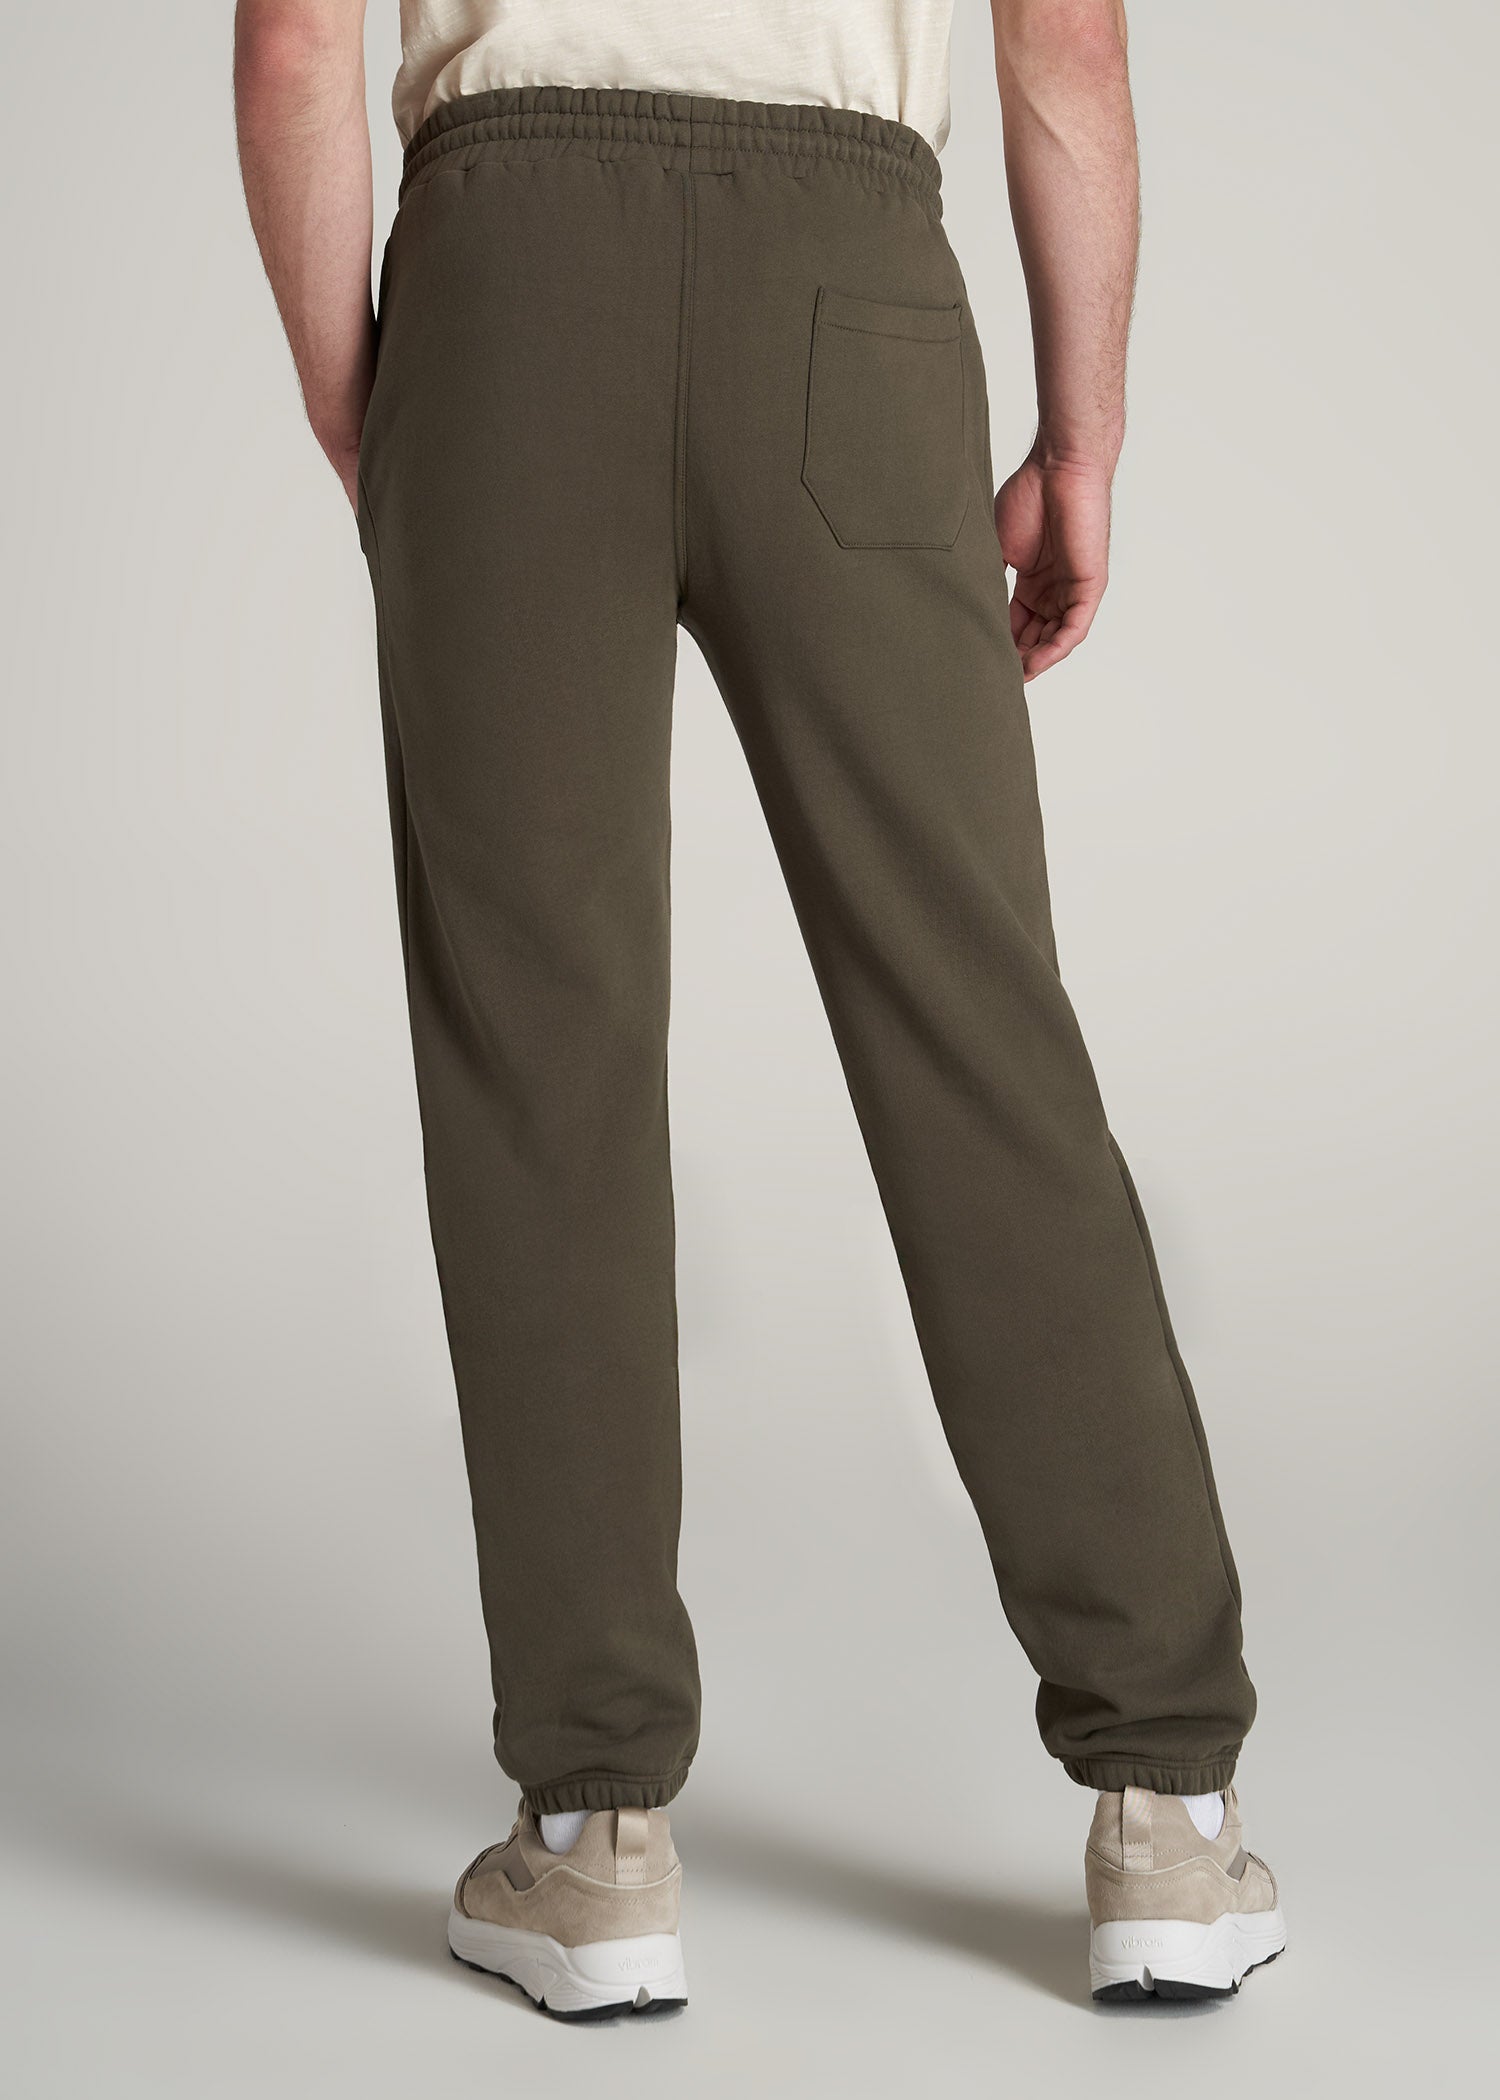       American-Tall-Men-Fleece-Sweatpants-Elastic-Bottom-Camo-Green-back